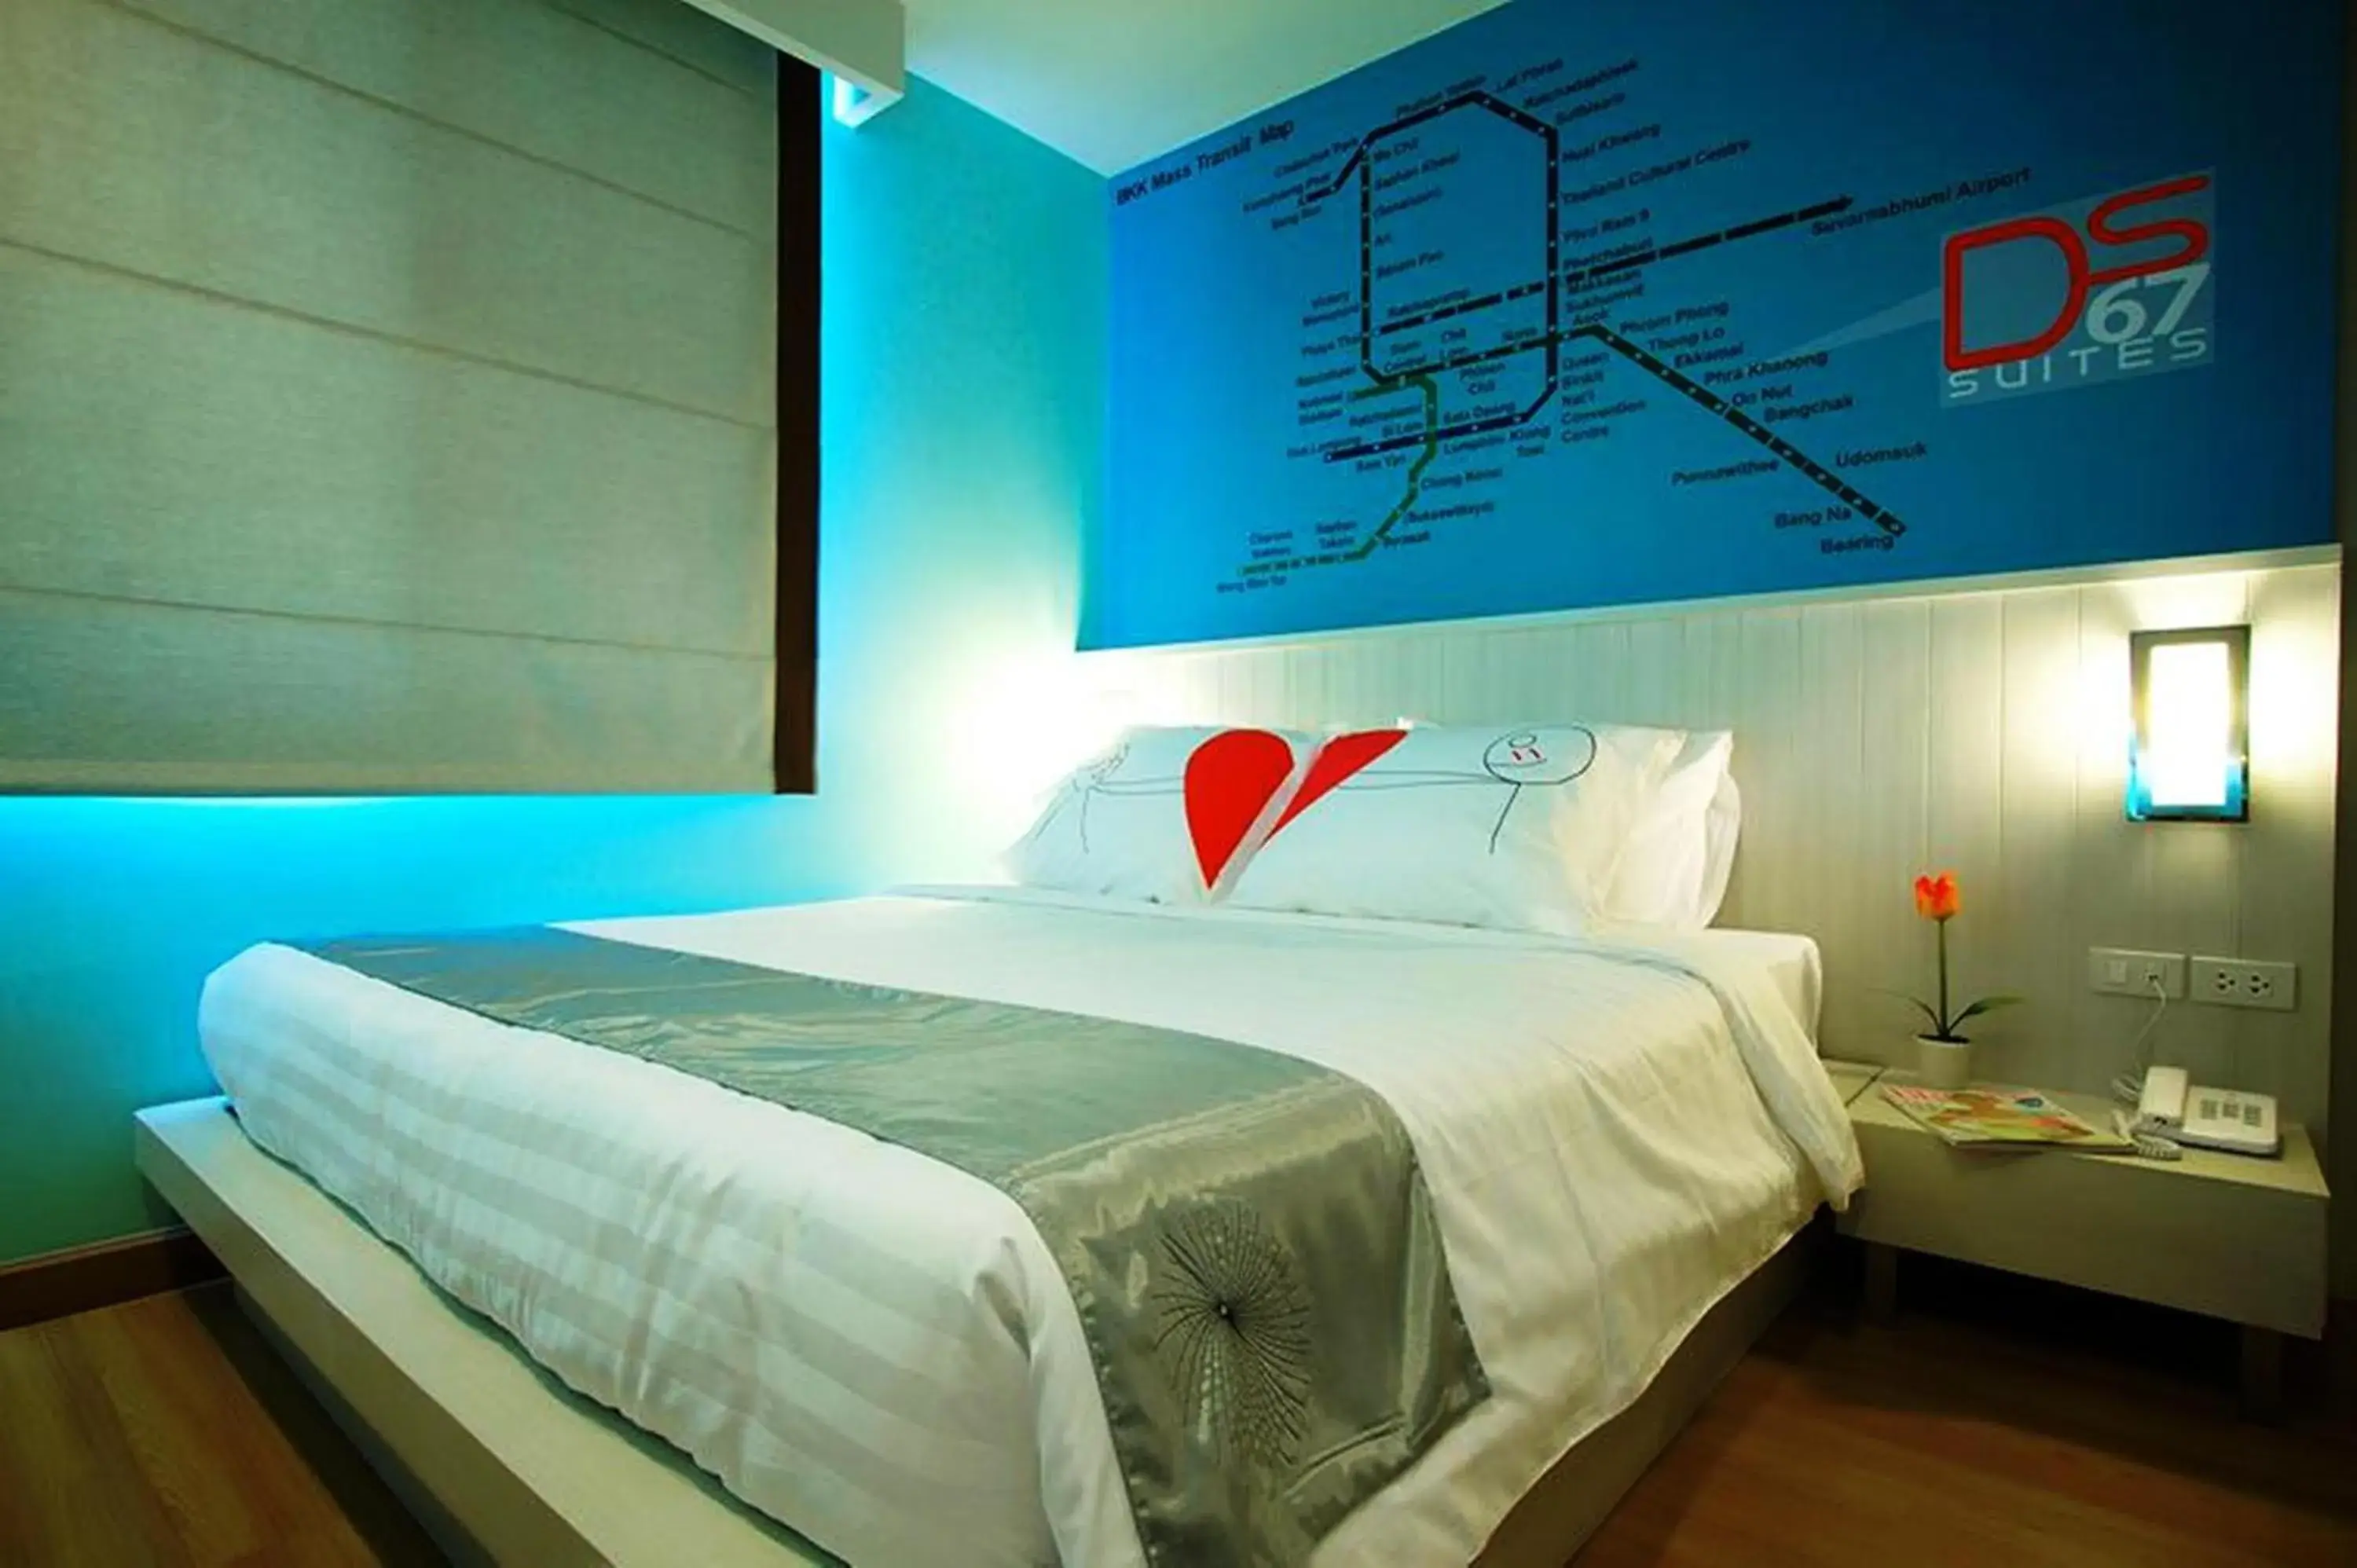 Bathroom, Bed in DS67 Suites Hotel